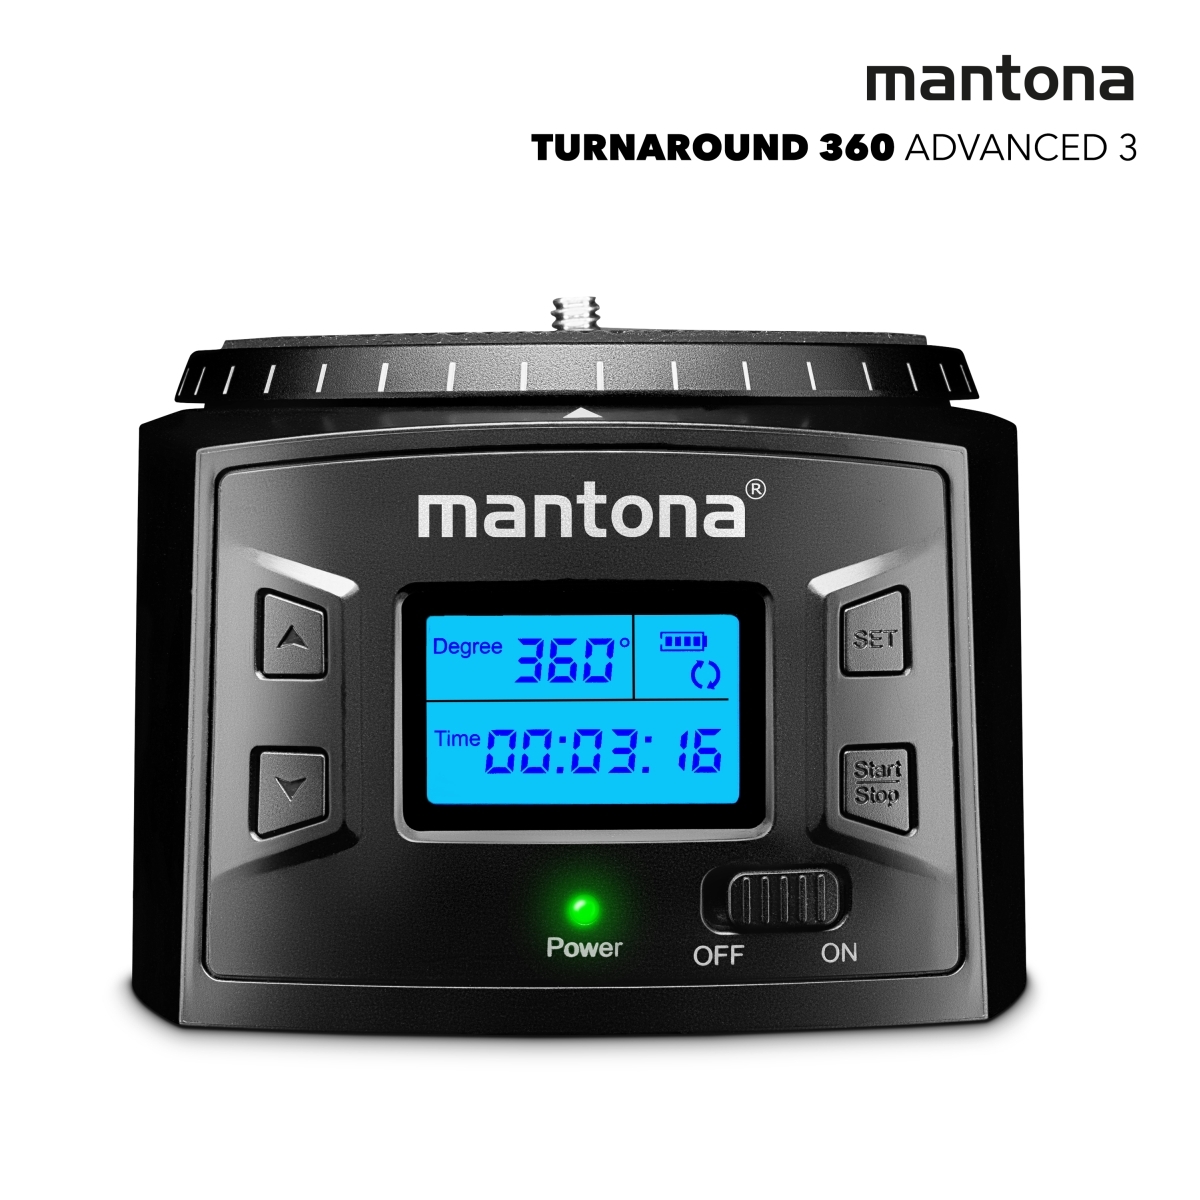 Mantona Turnaround 360 Advanced 3 - Panorama électronique